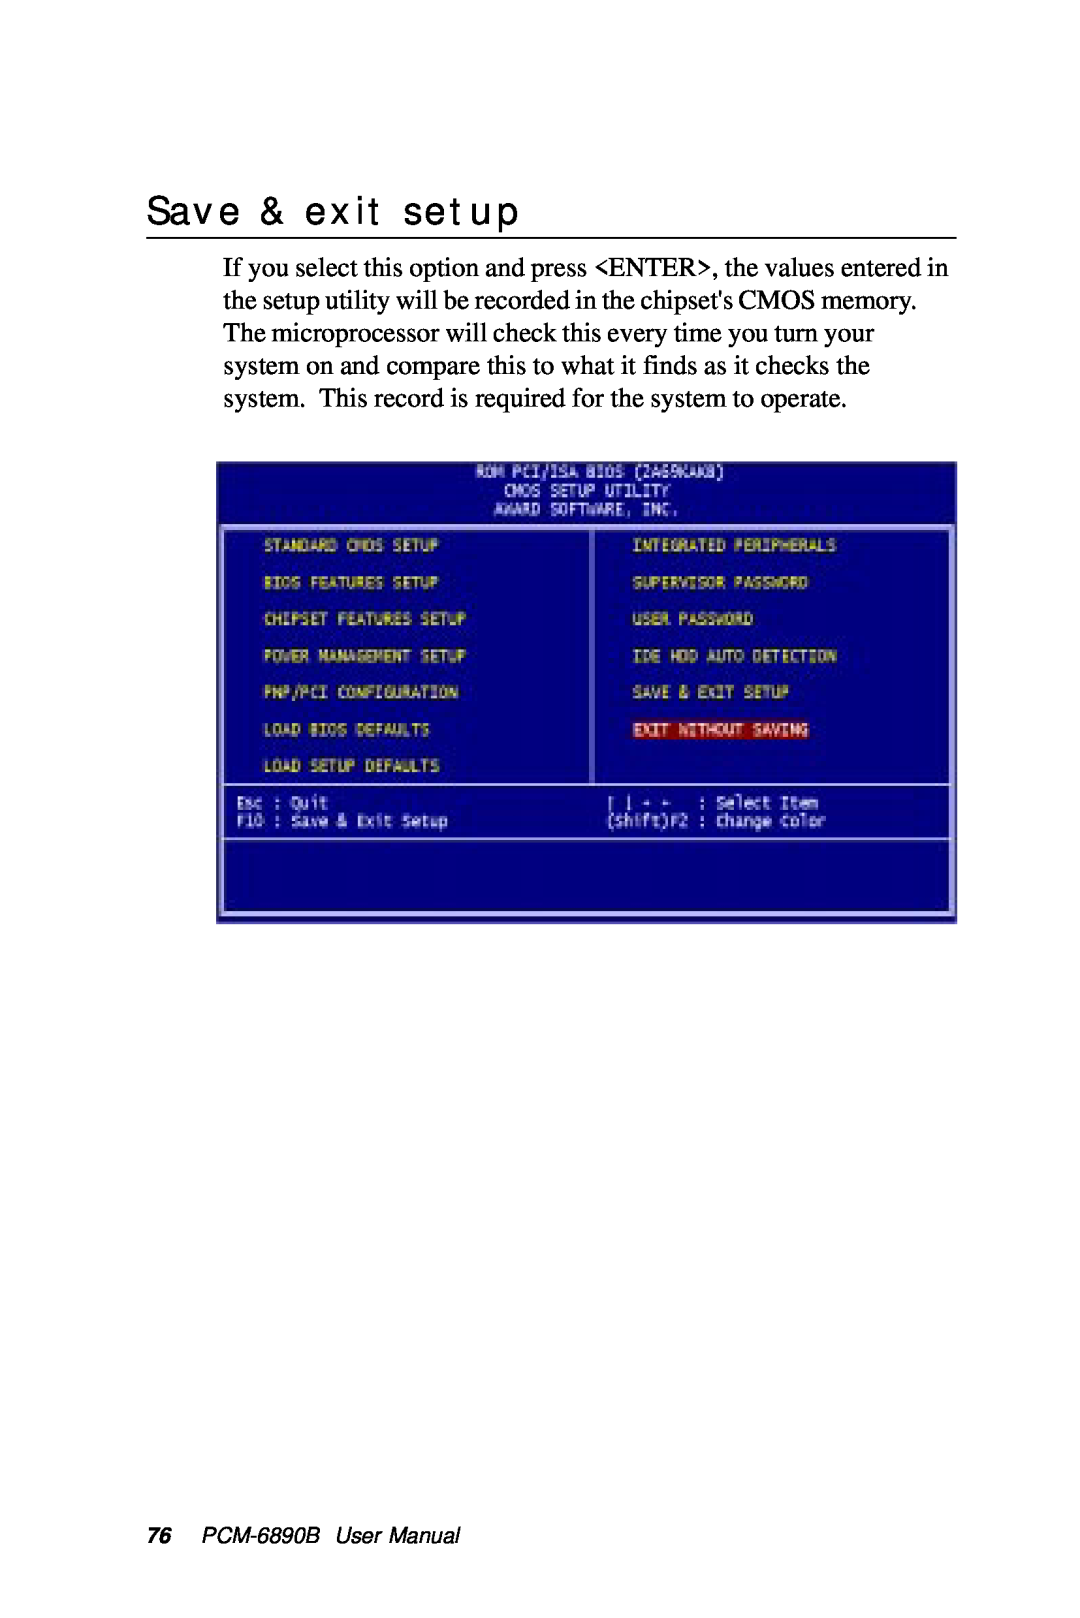 IBM All-in-One FC/Socket 370 Celeron manual Save & exit setup, PCM-6890B User Manual 